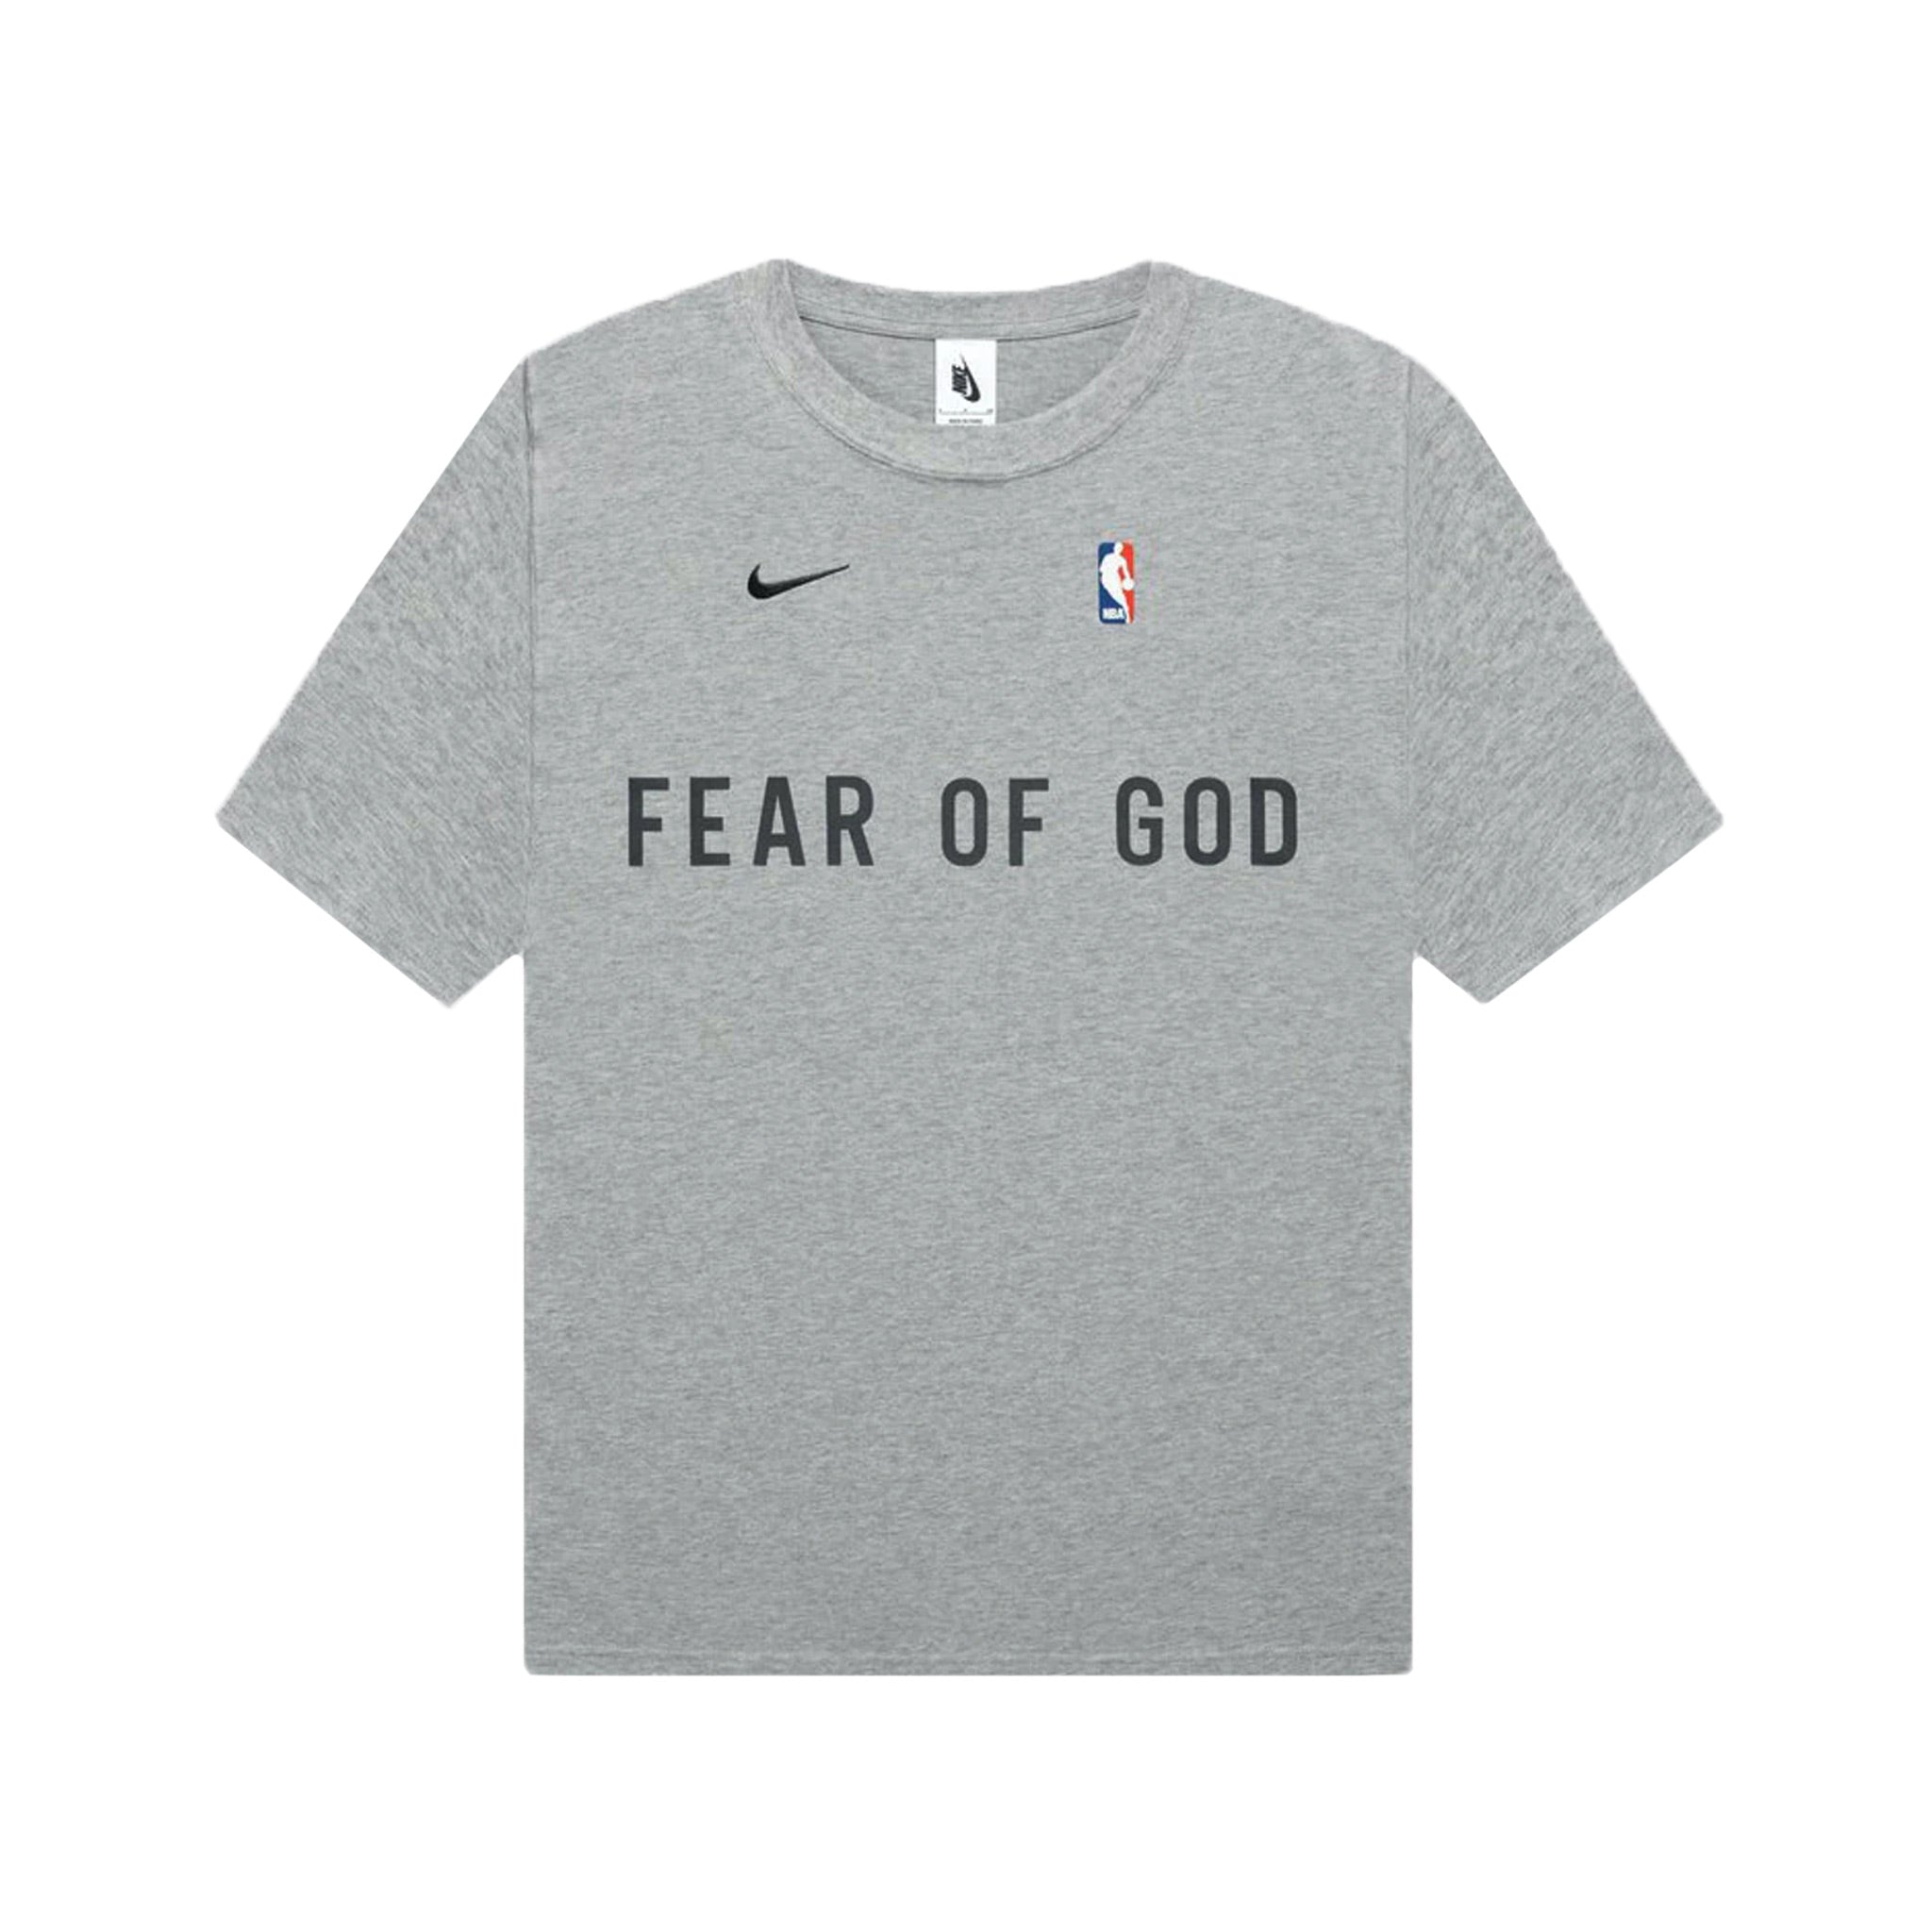 Fear Of God x Nike Warm Up T-Shirt - Dark Heather Grey | Points ...